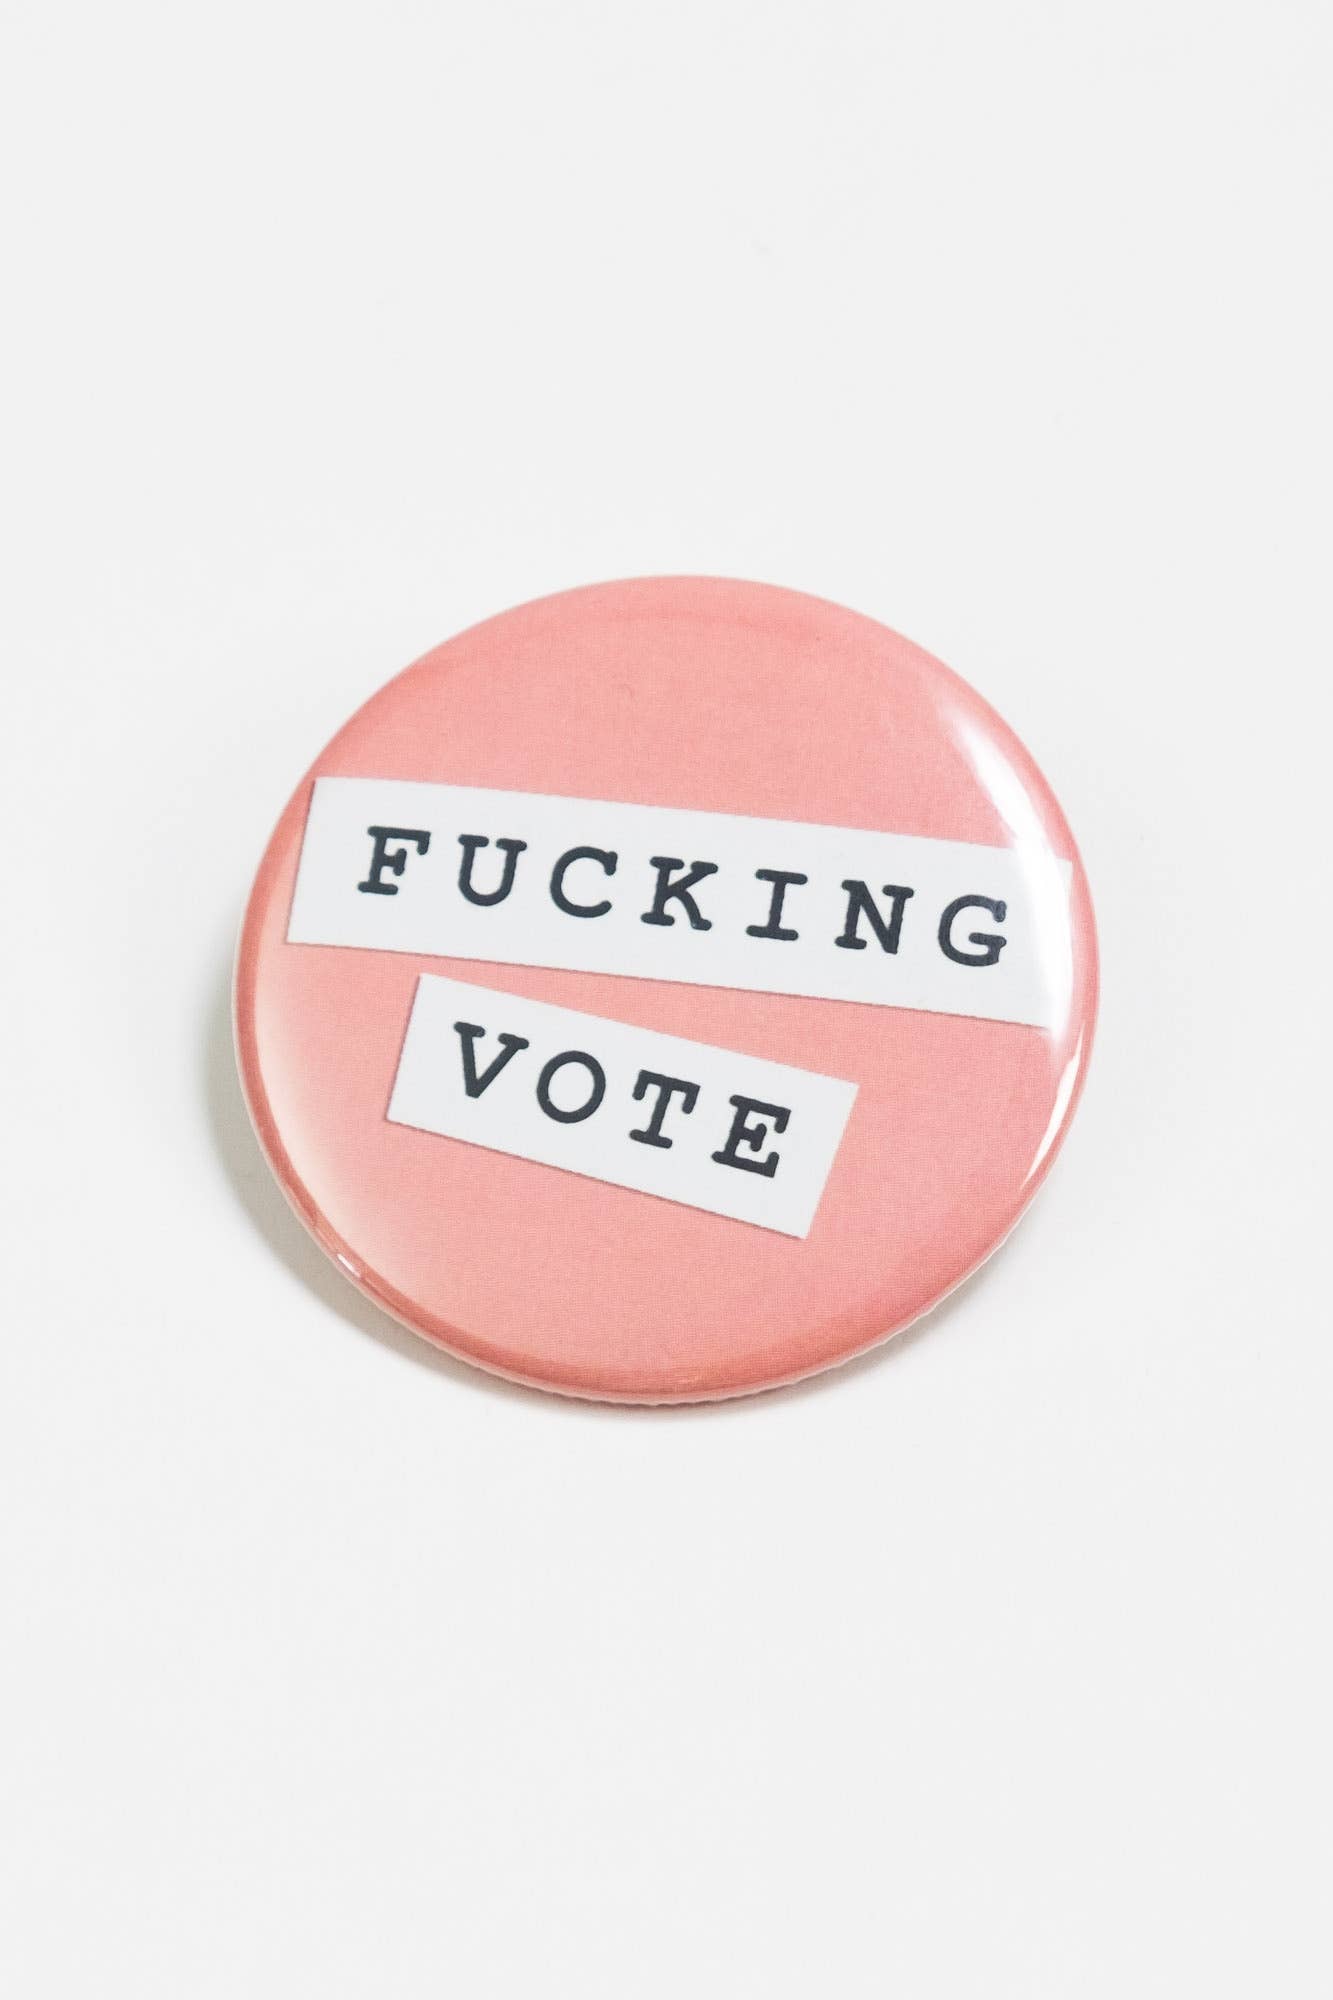 Fucking Vote button